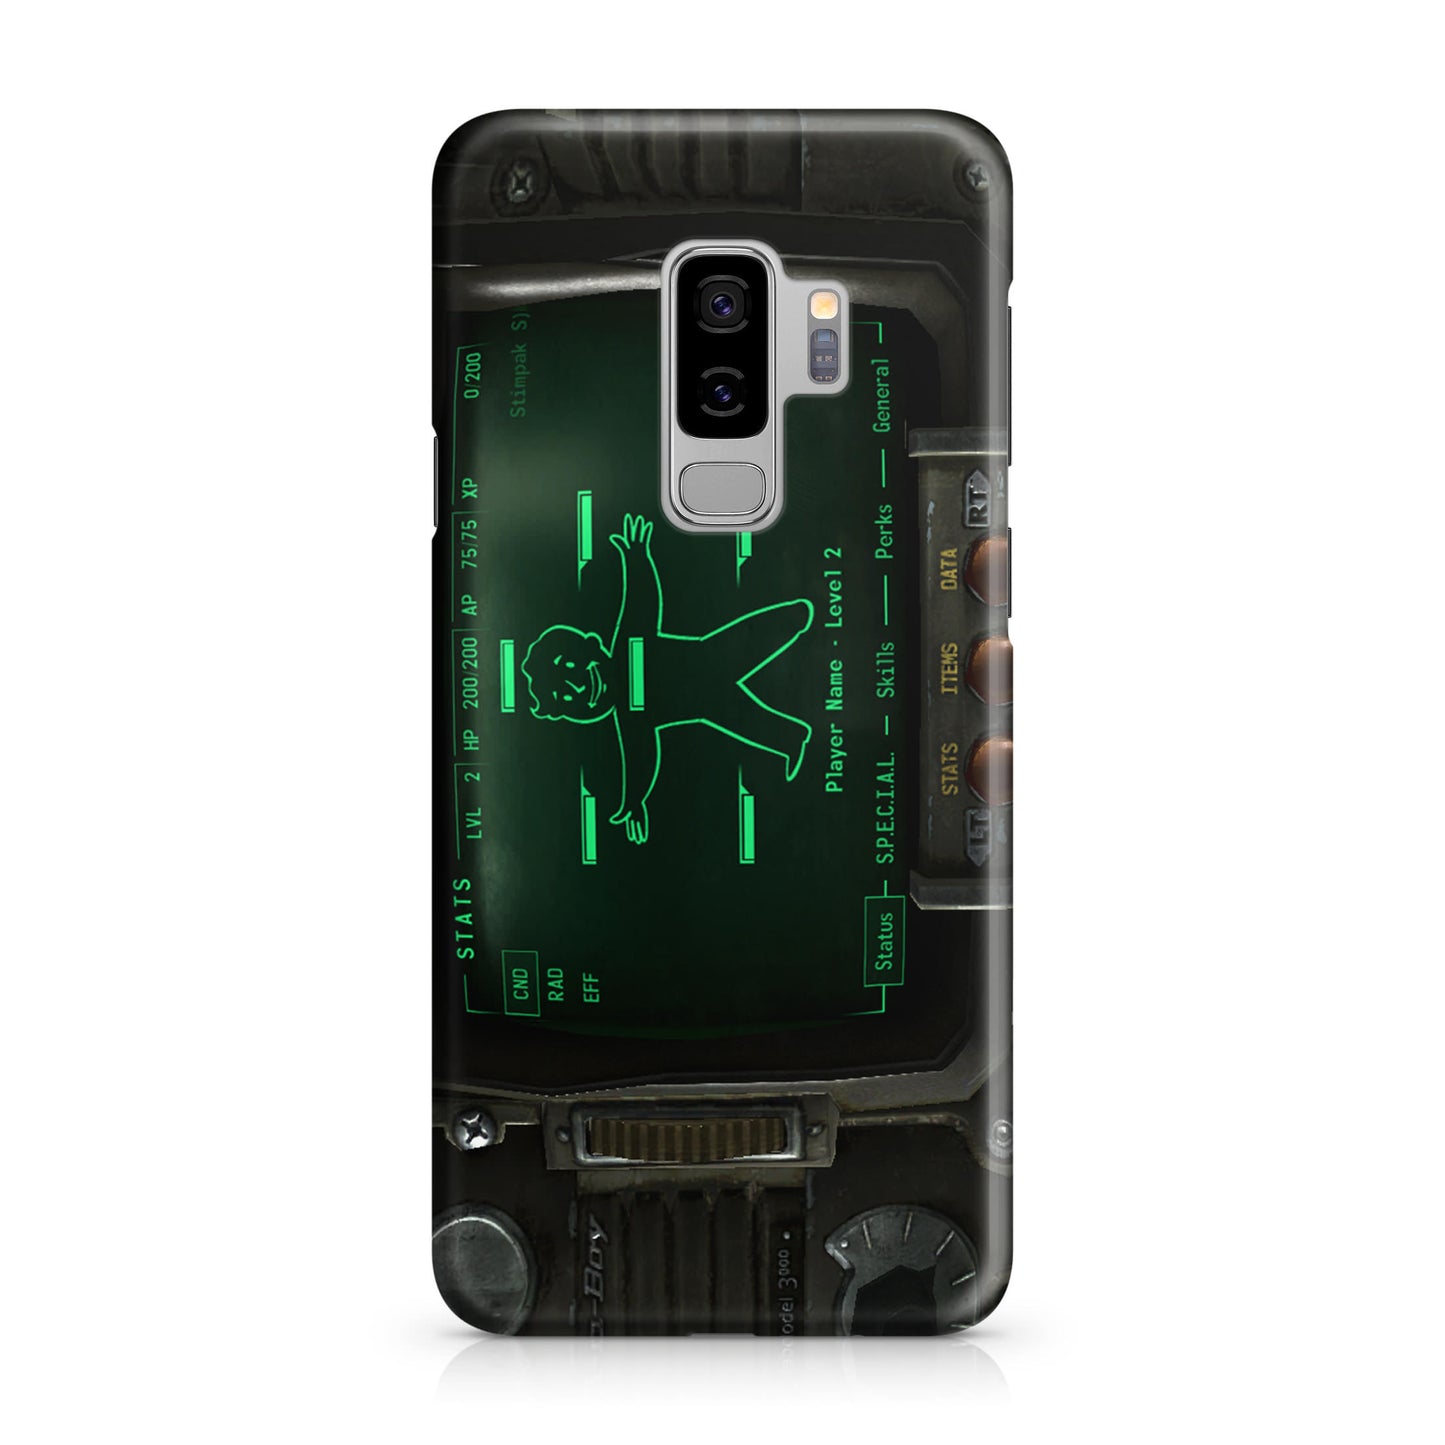 Pip-boy 3000 Galaxy S9 Plus Case